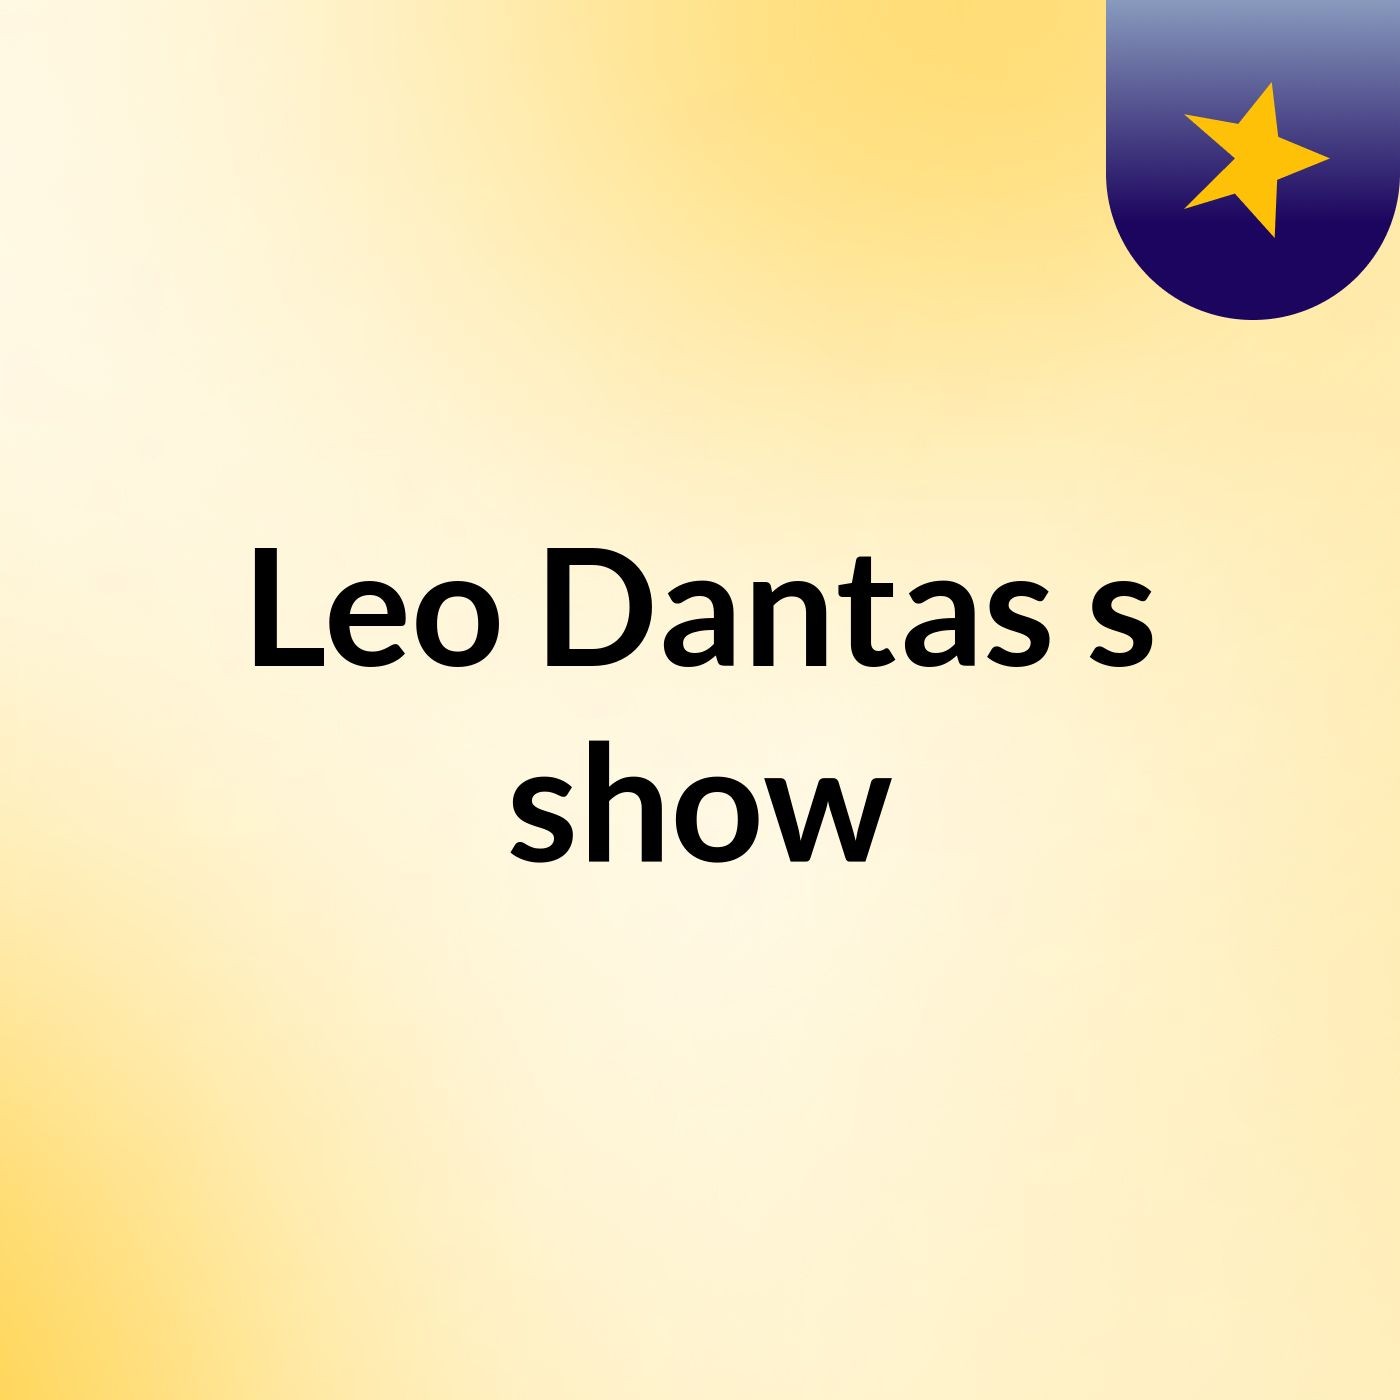 Leo Dantas's show